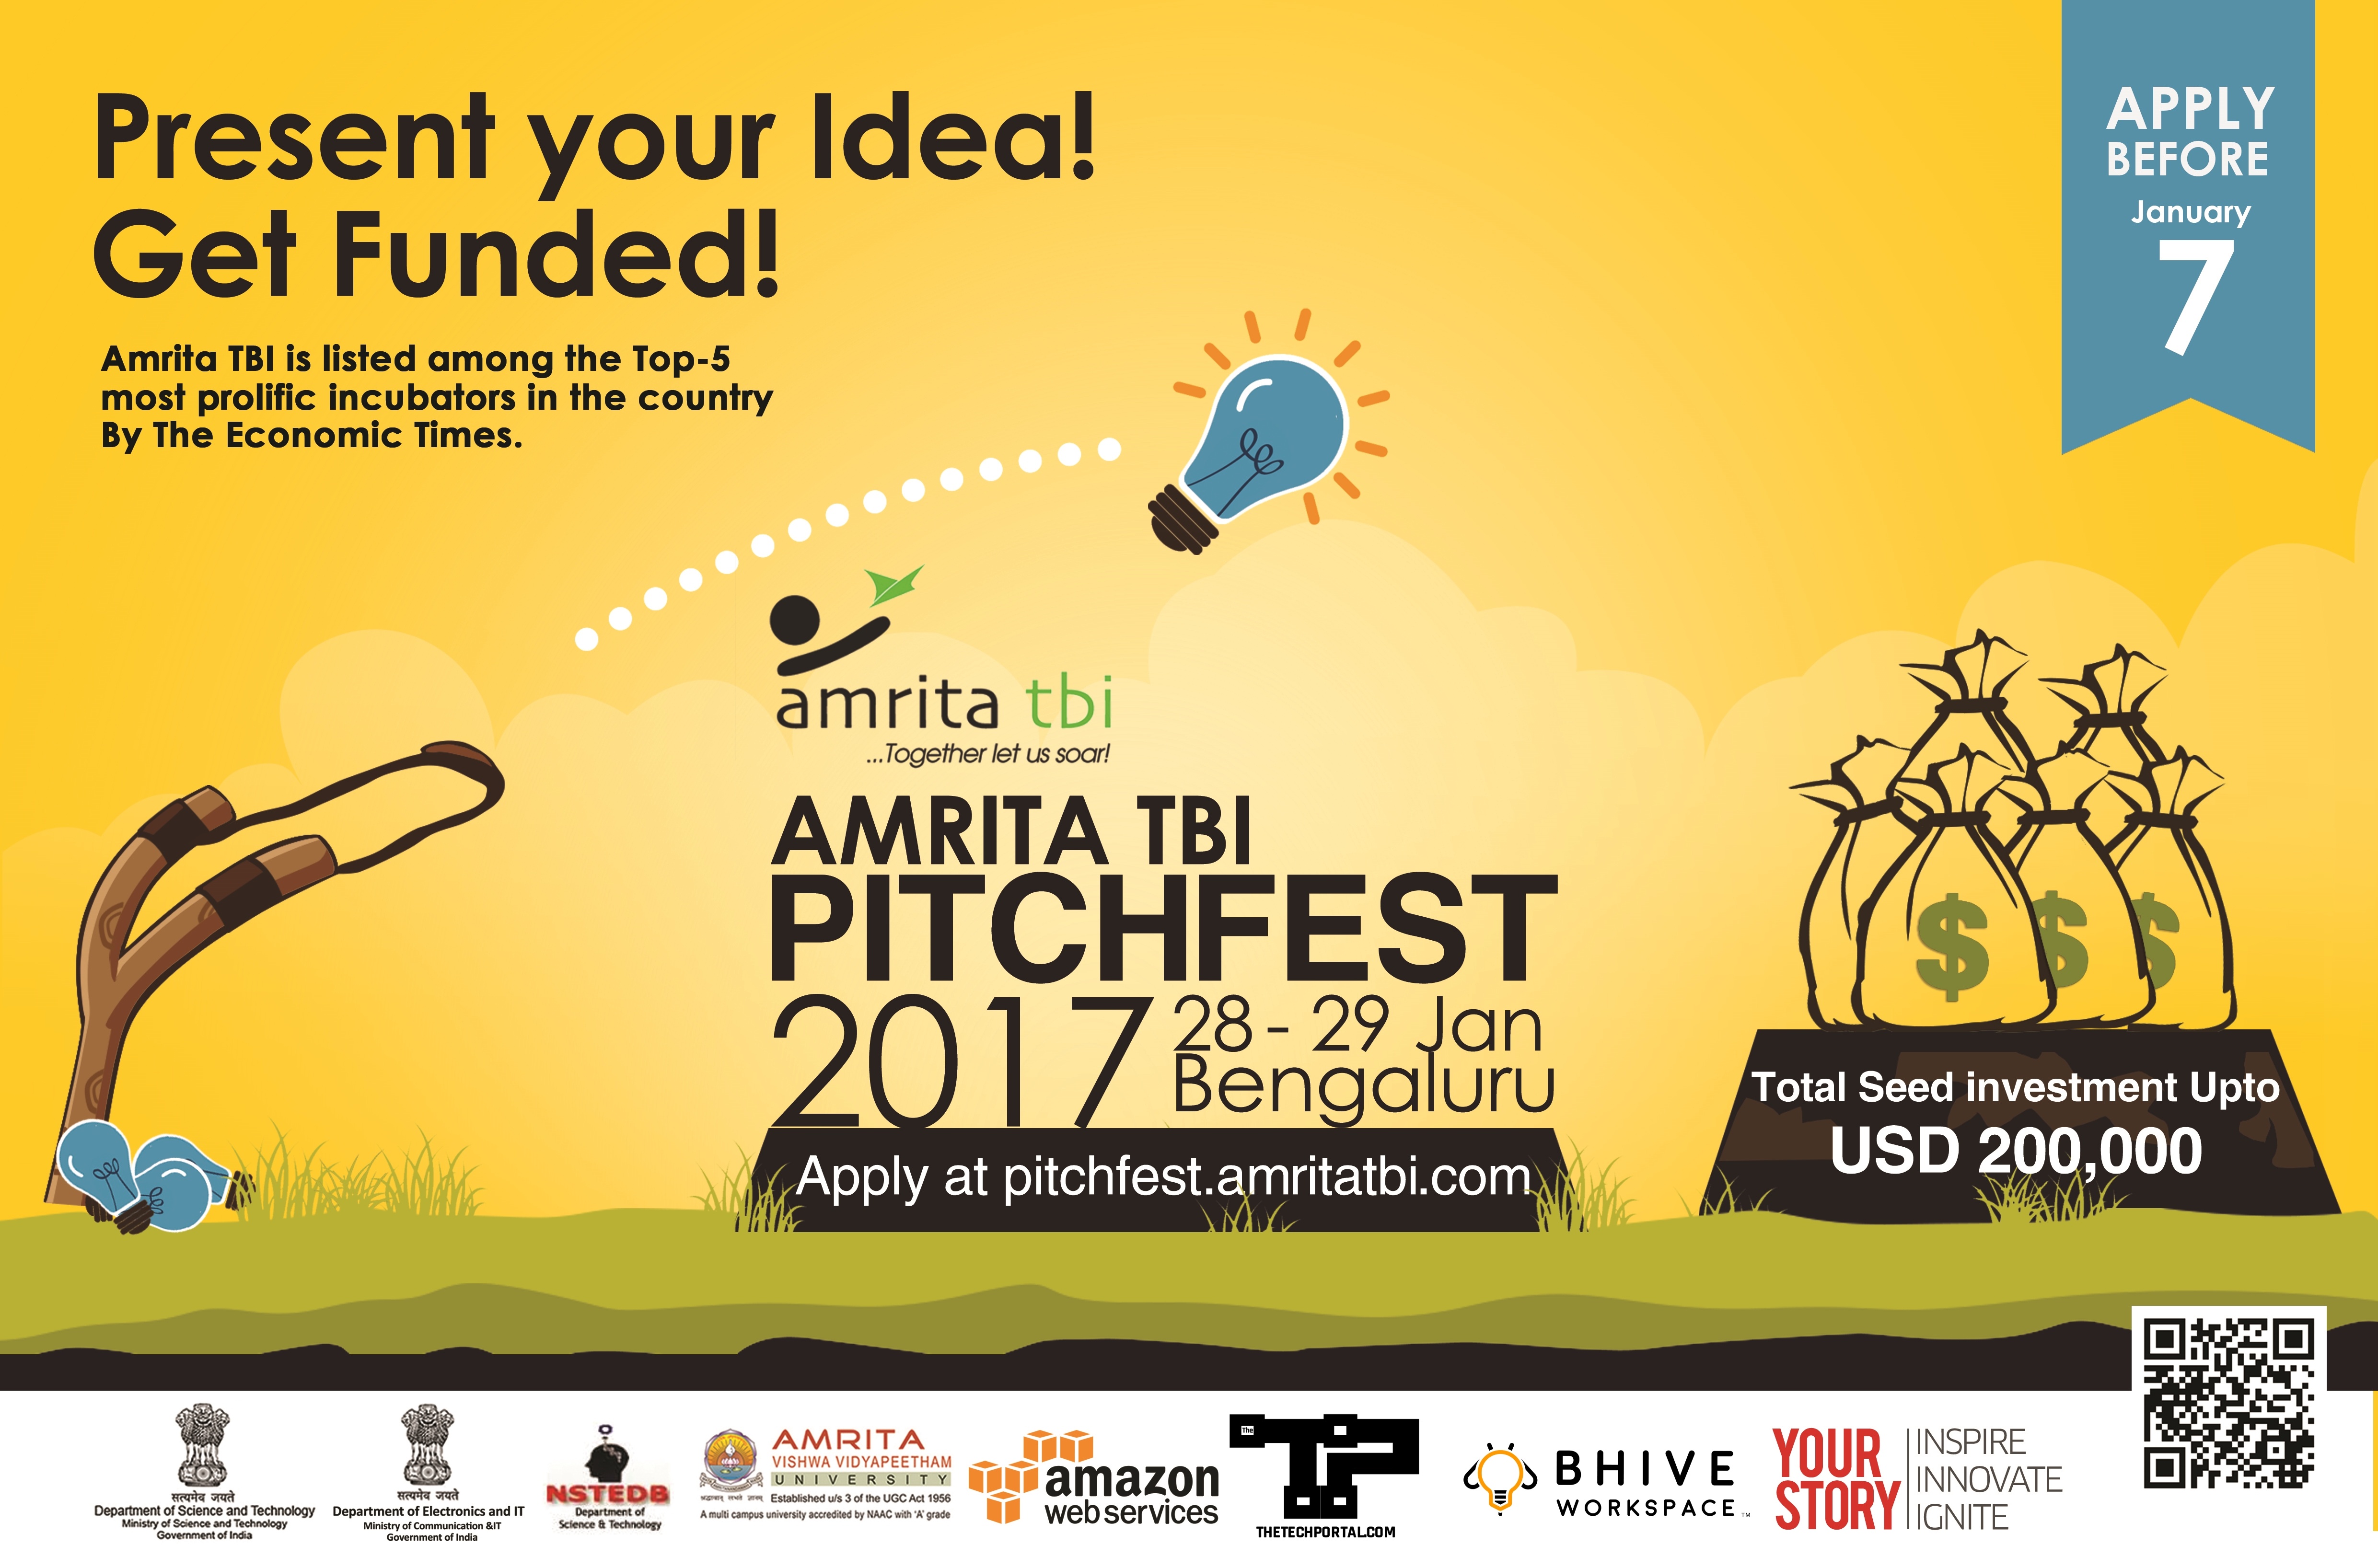 Amrita TBI pitchfest